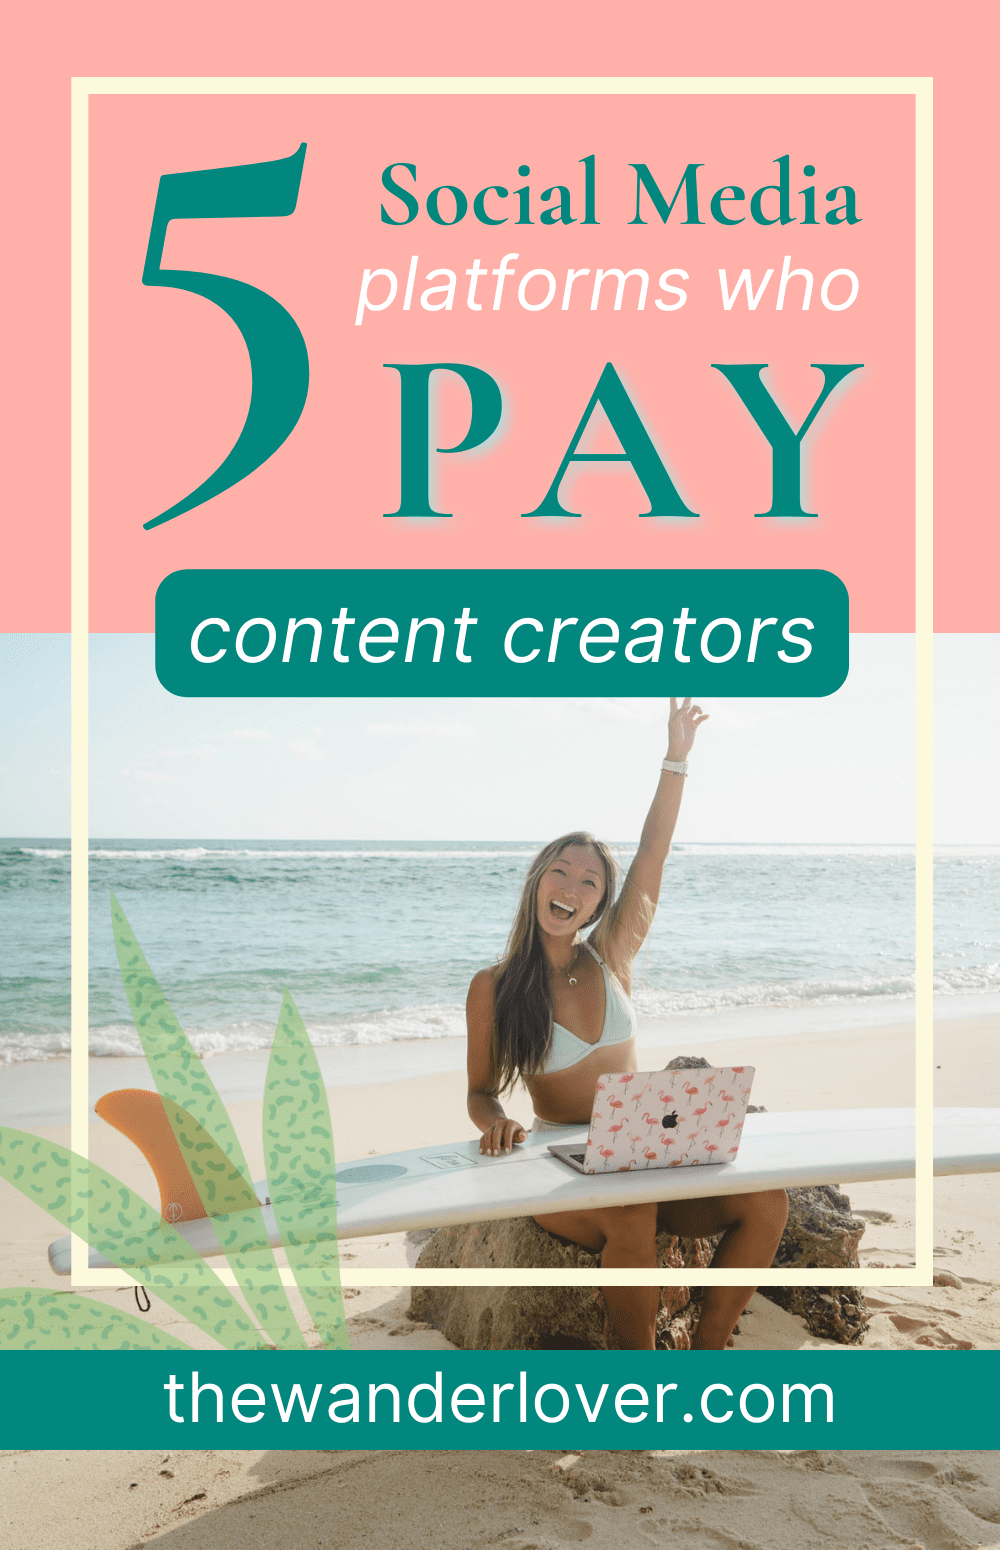 5 Social Media Platforms that Pay Creators to Make Content